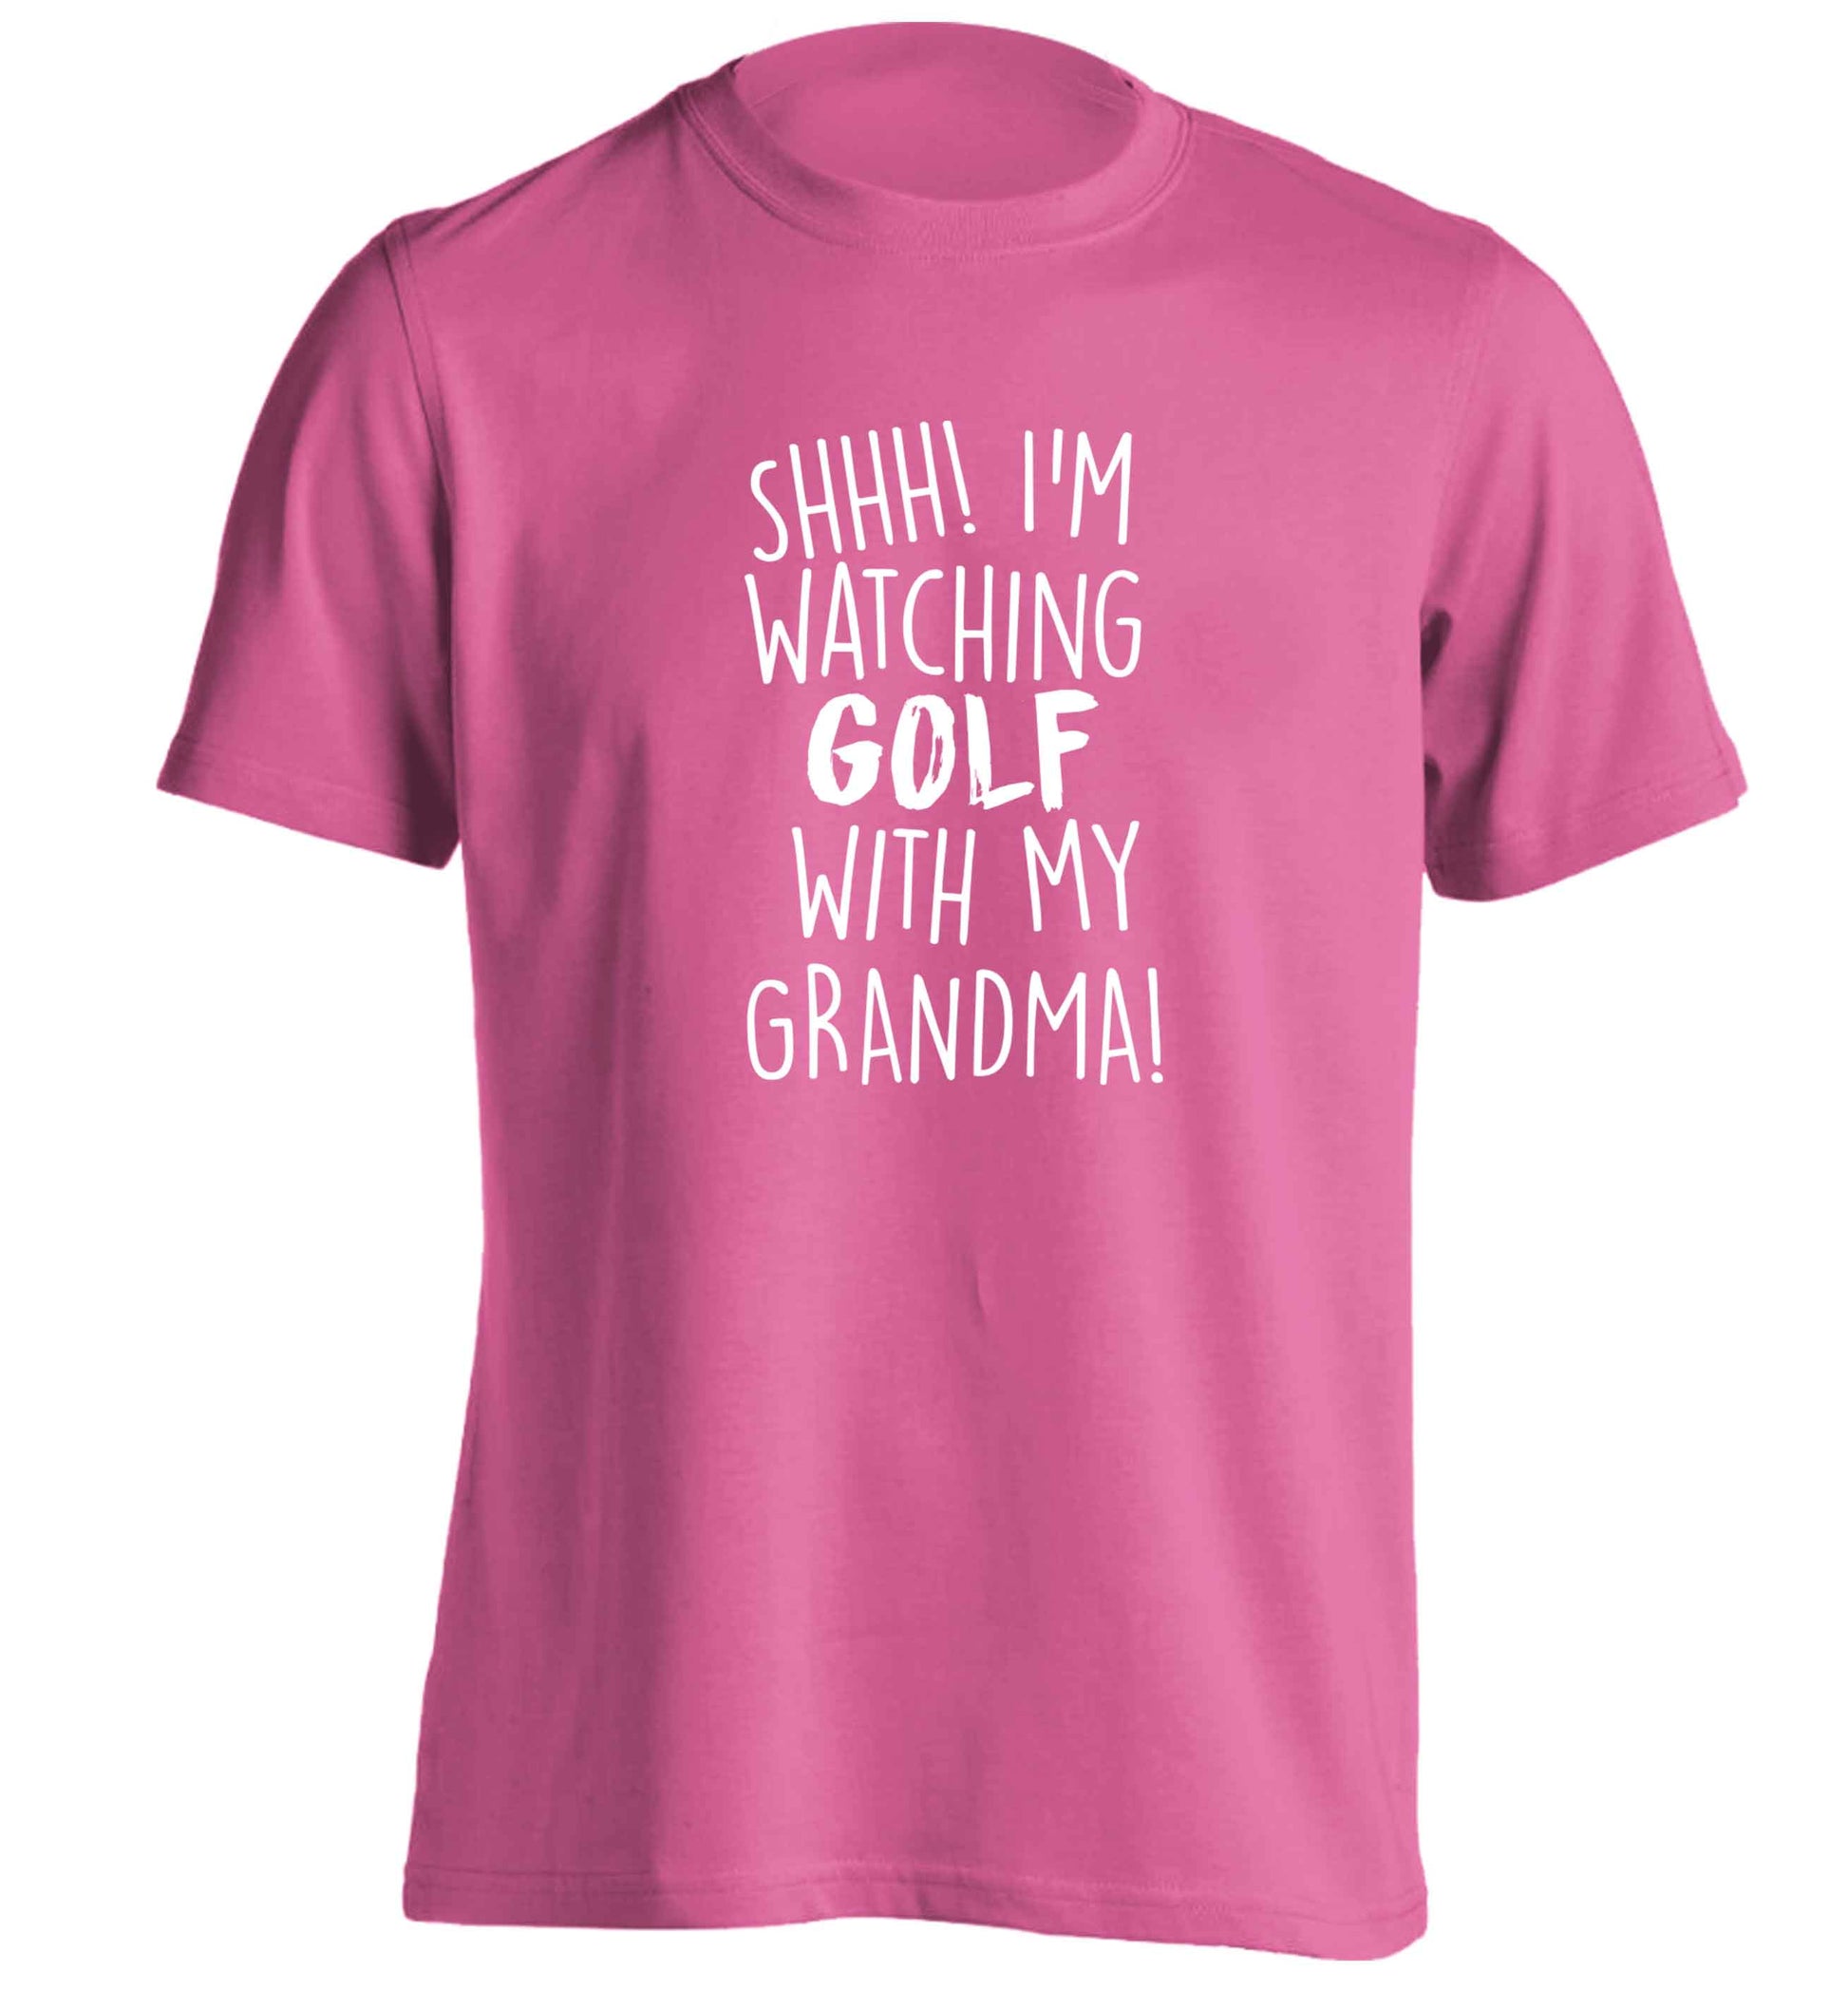 Shh I'm watching golf with my grandma adults unisex pink Tshirt 2XL